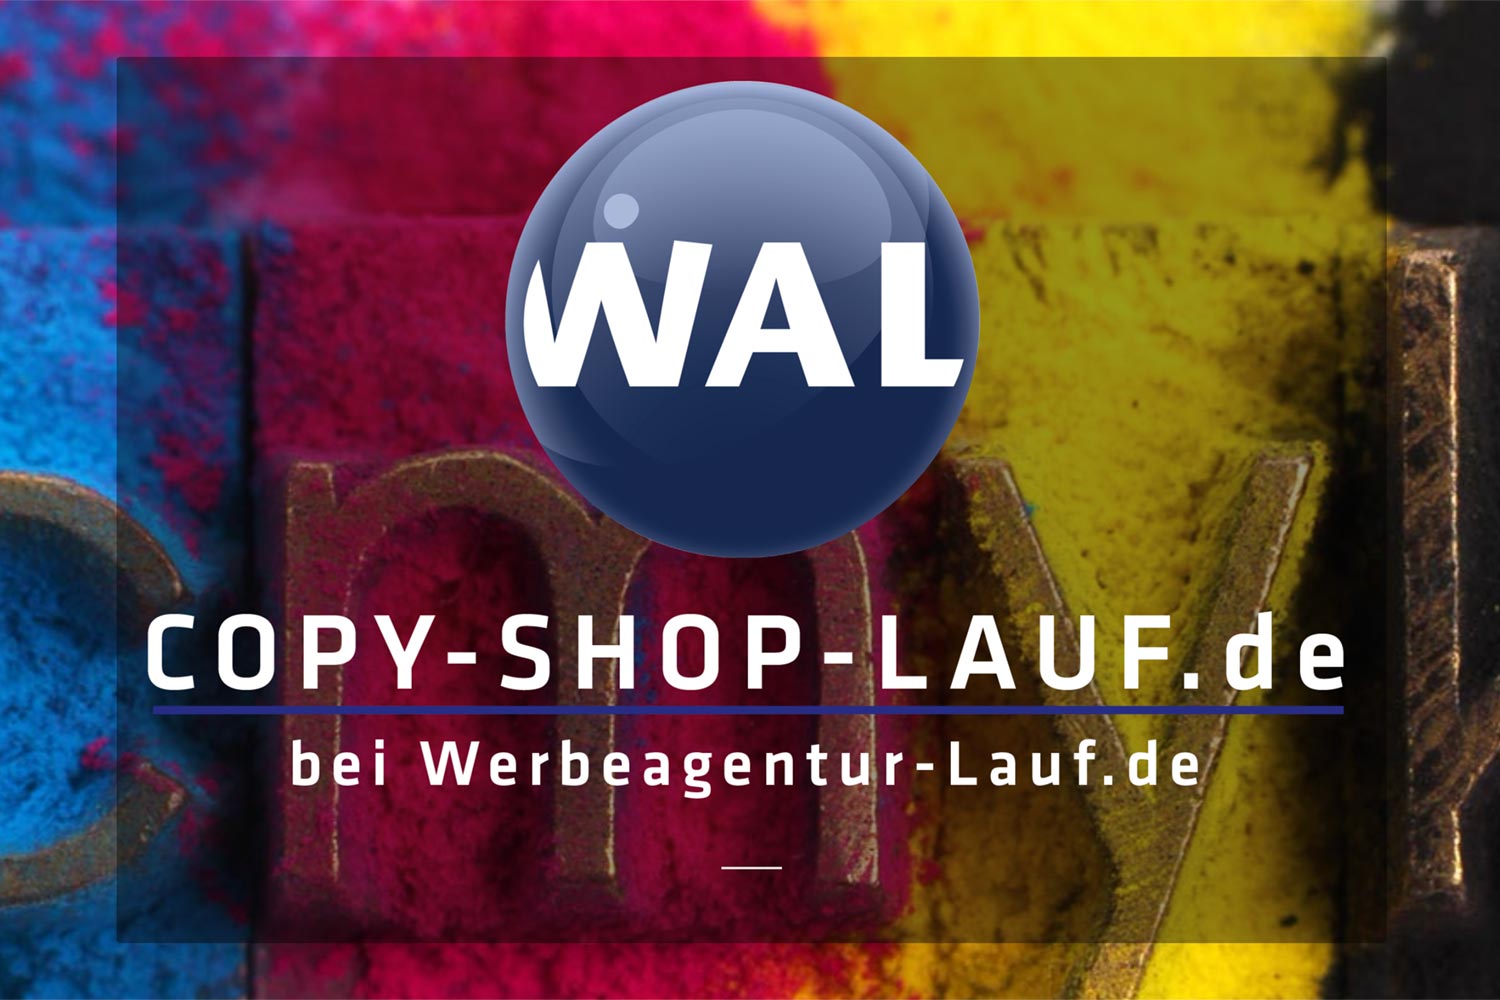 (c) Copy-shop-lauf.de